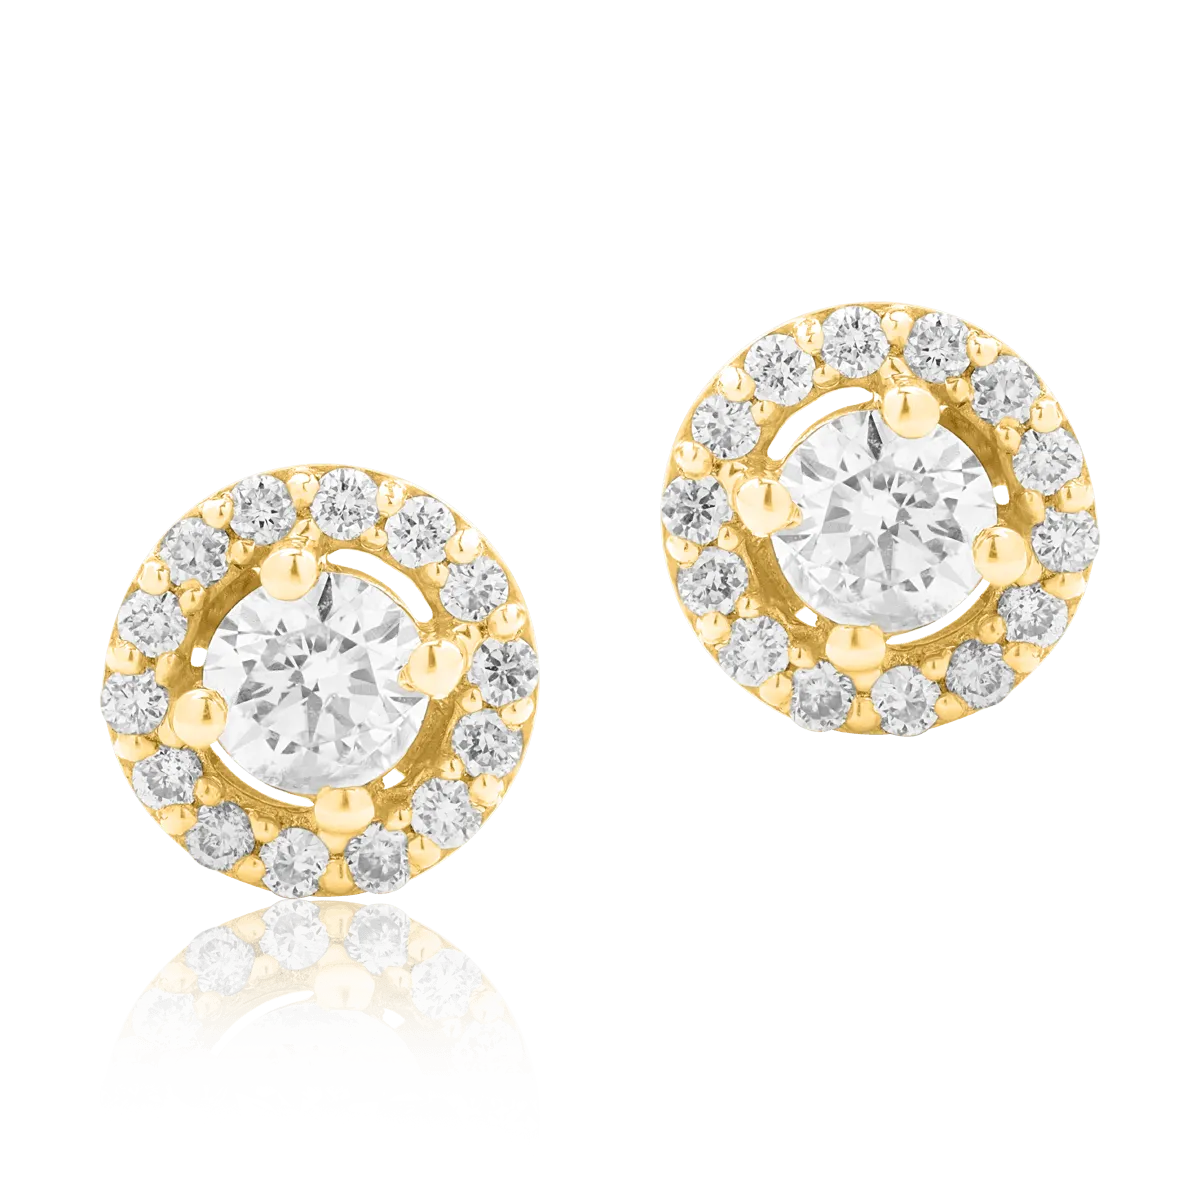 18K yellow gold earrings with 0.34ct diamonds